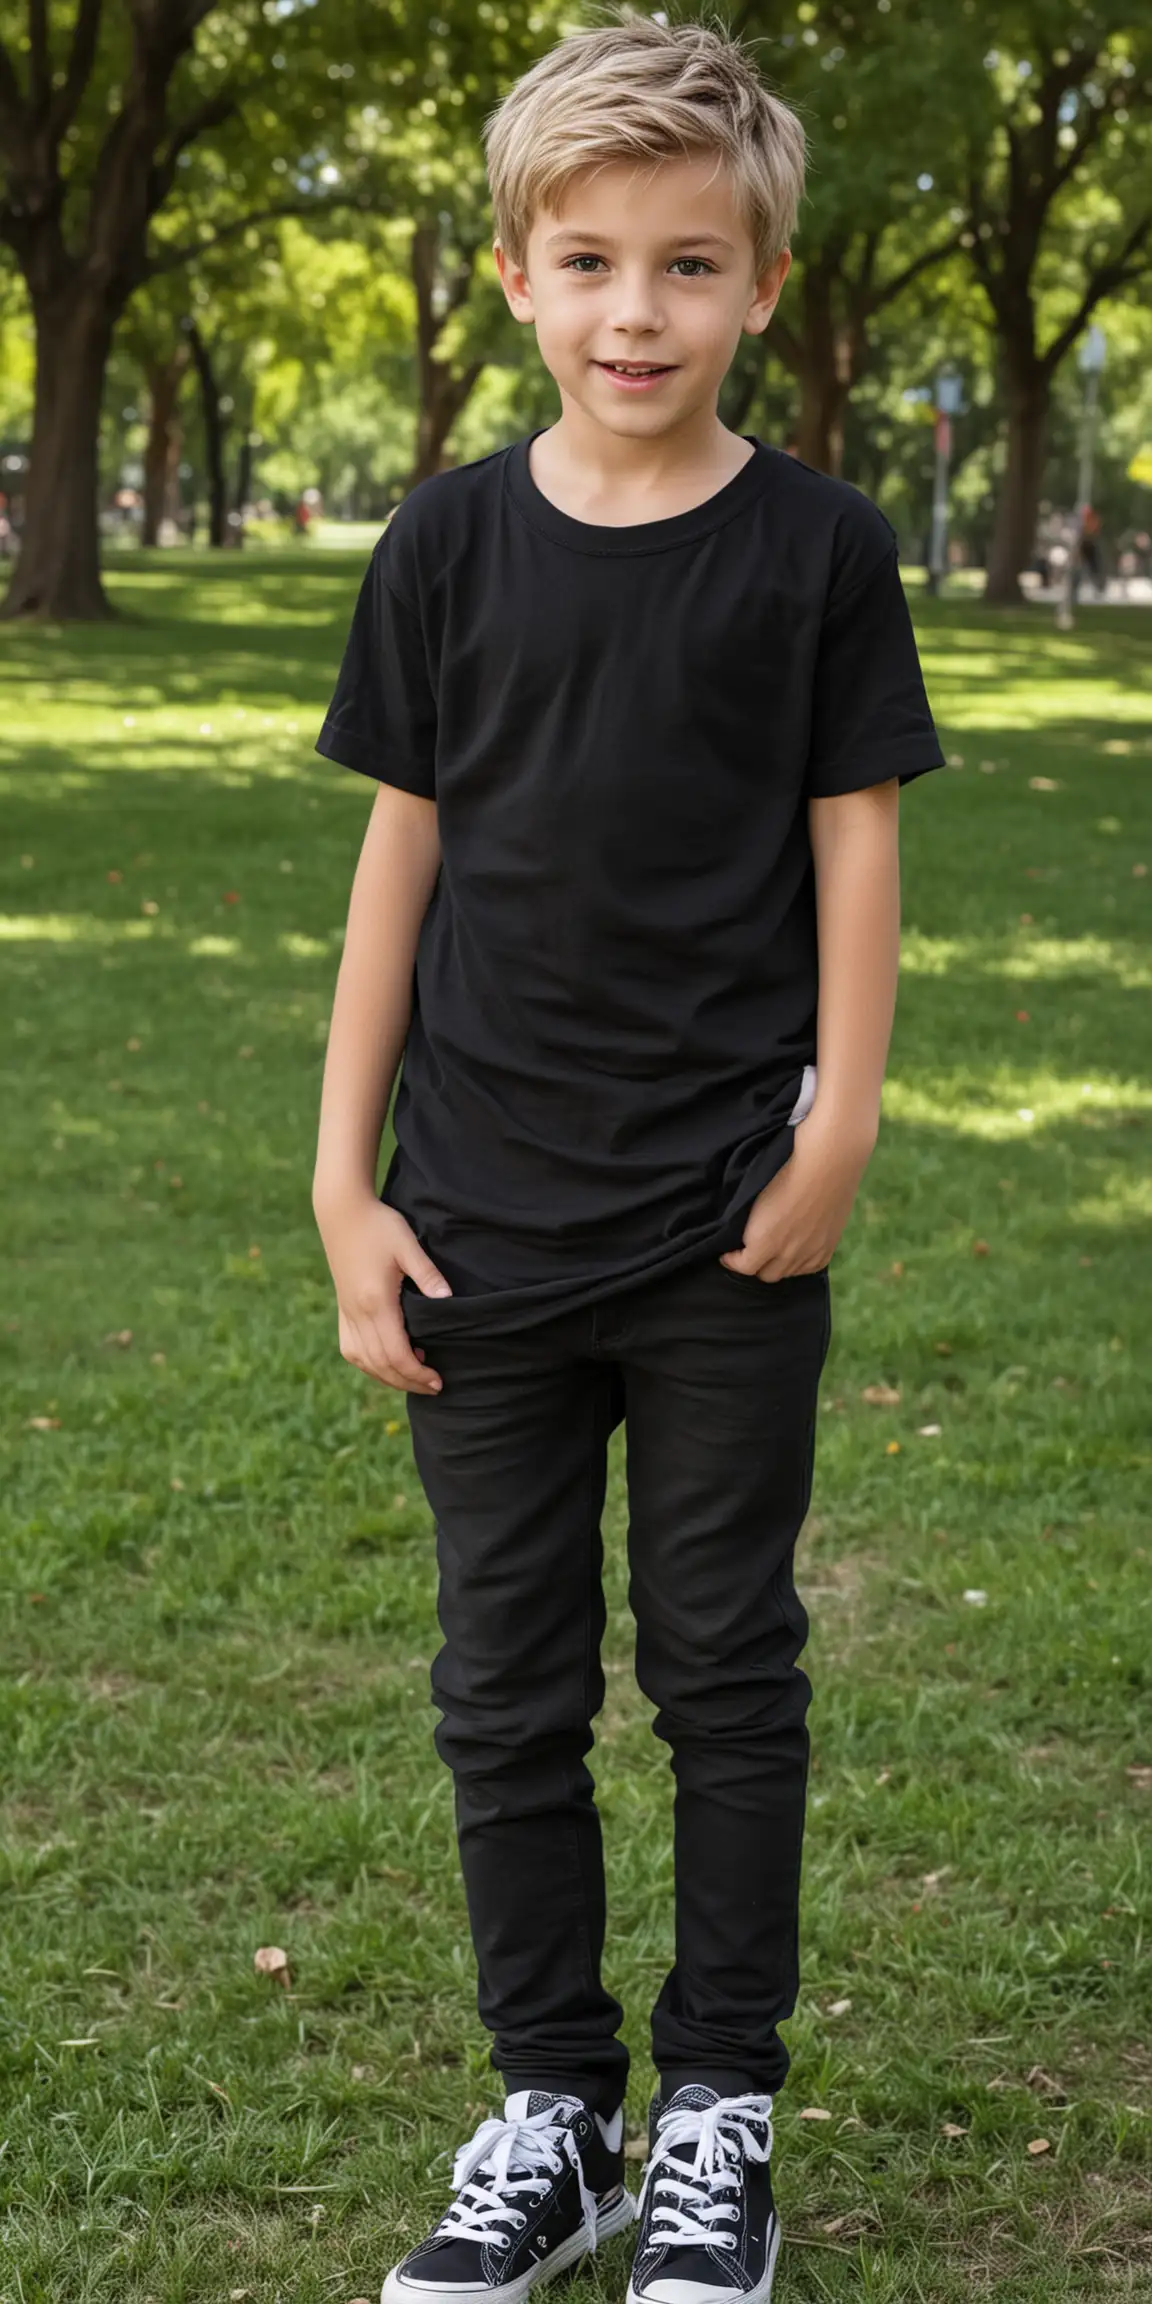 Playful White Boy in Black TShirt Enjoying Outdoor Fun in Park